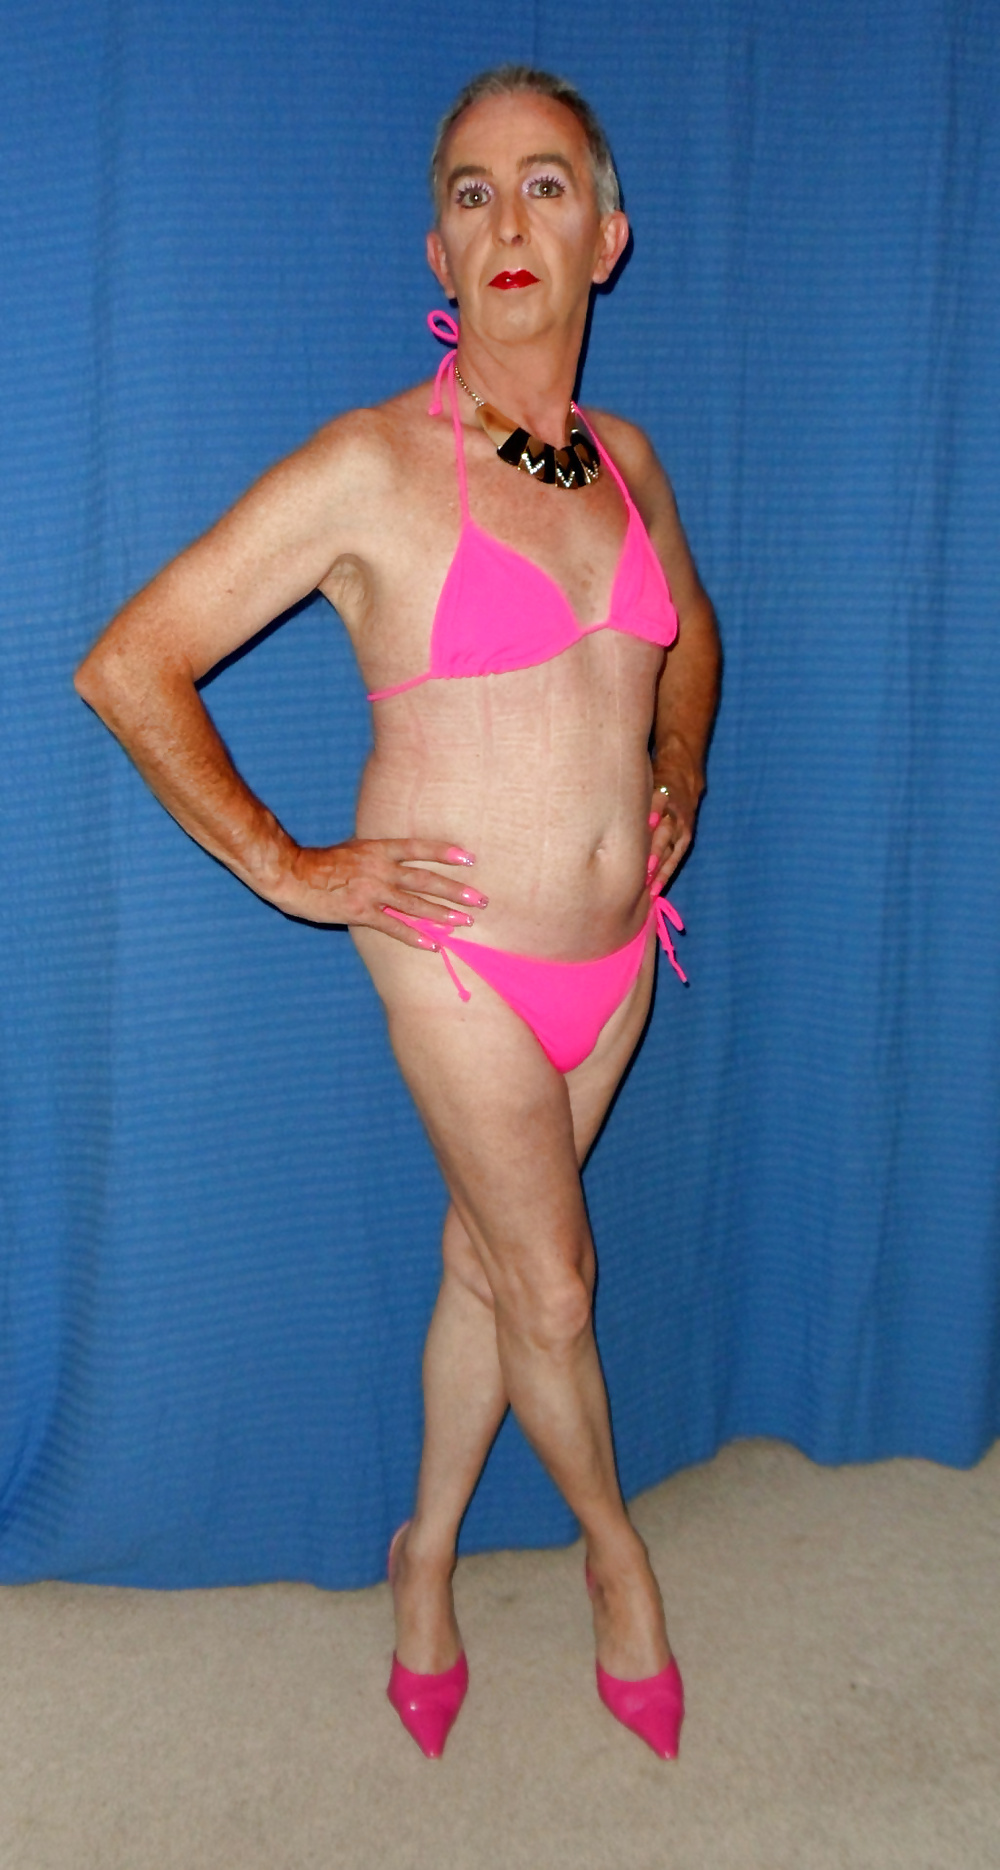 Marica del amo en su bikini
 #28317749